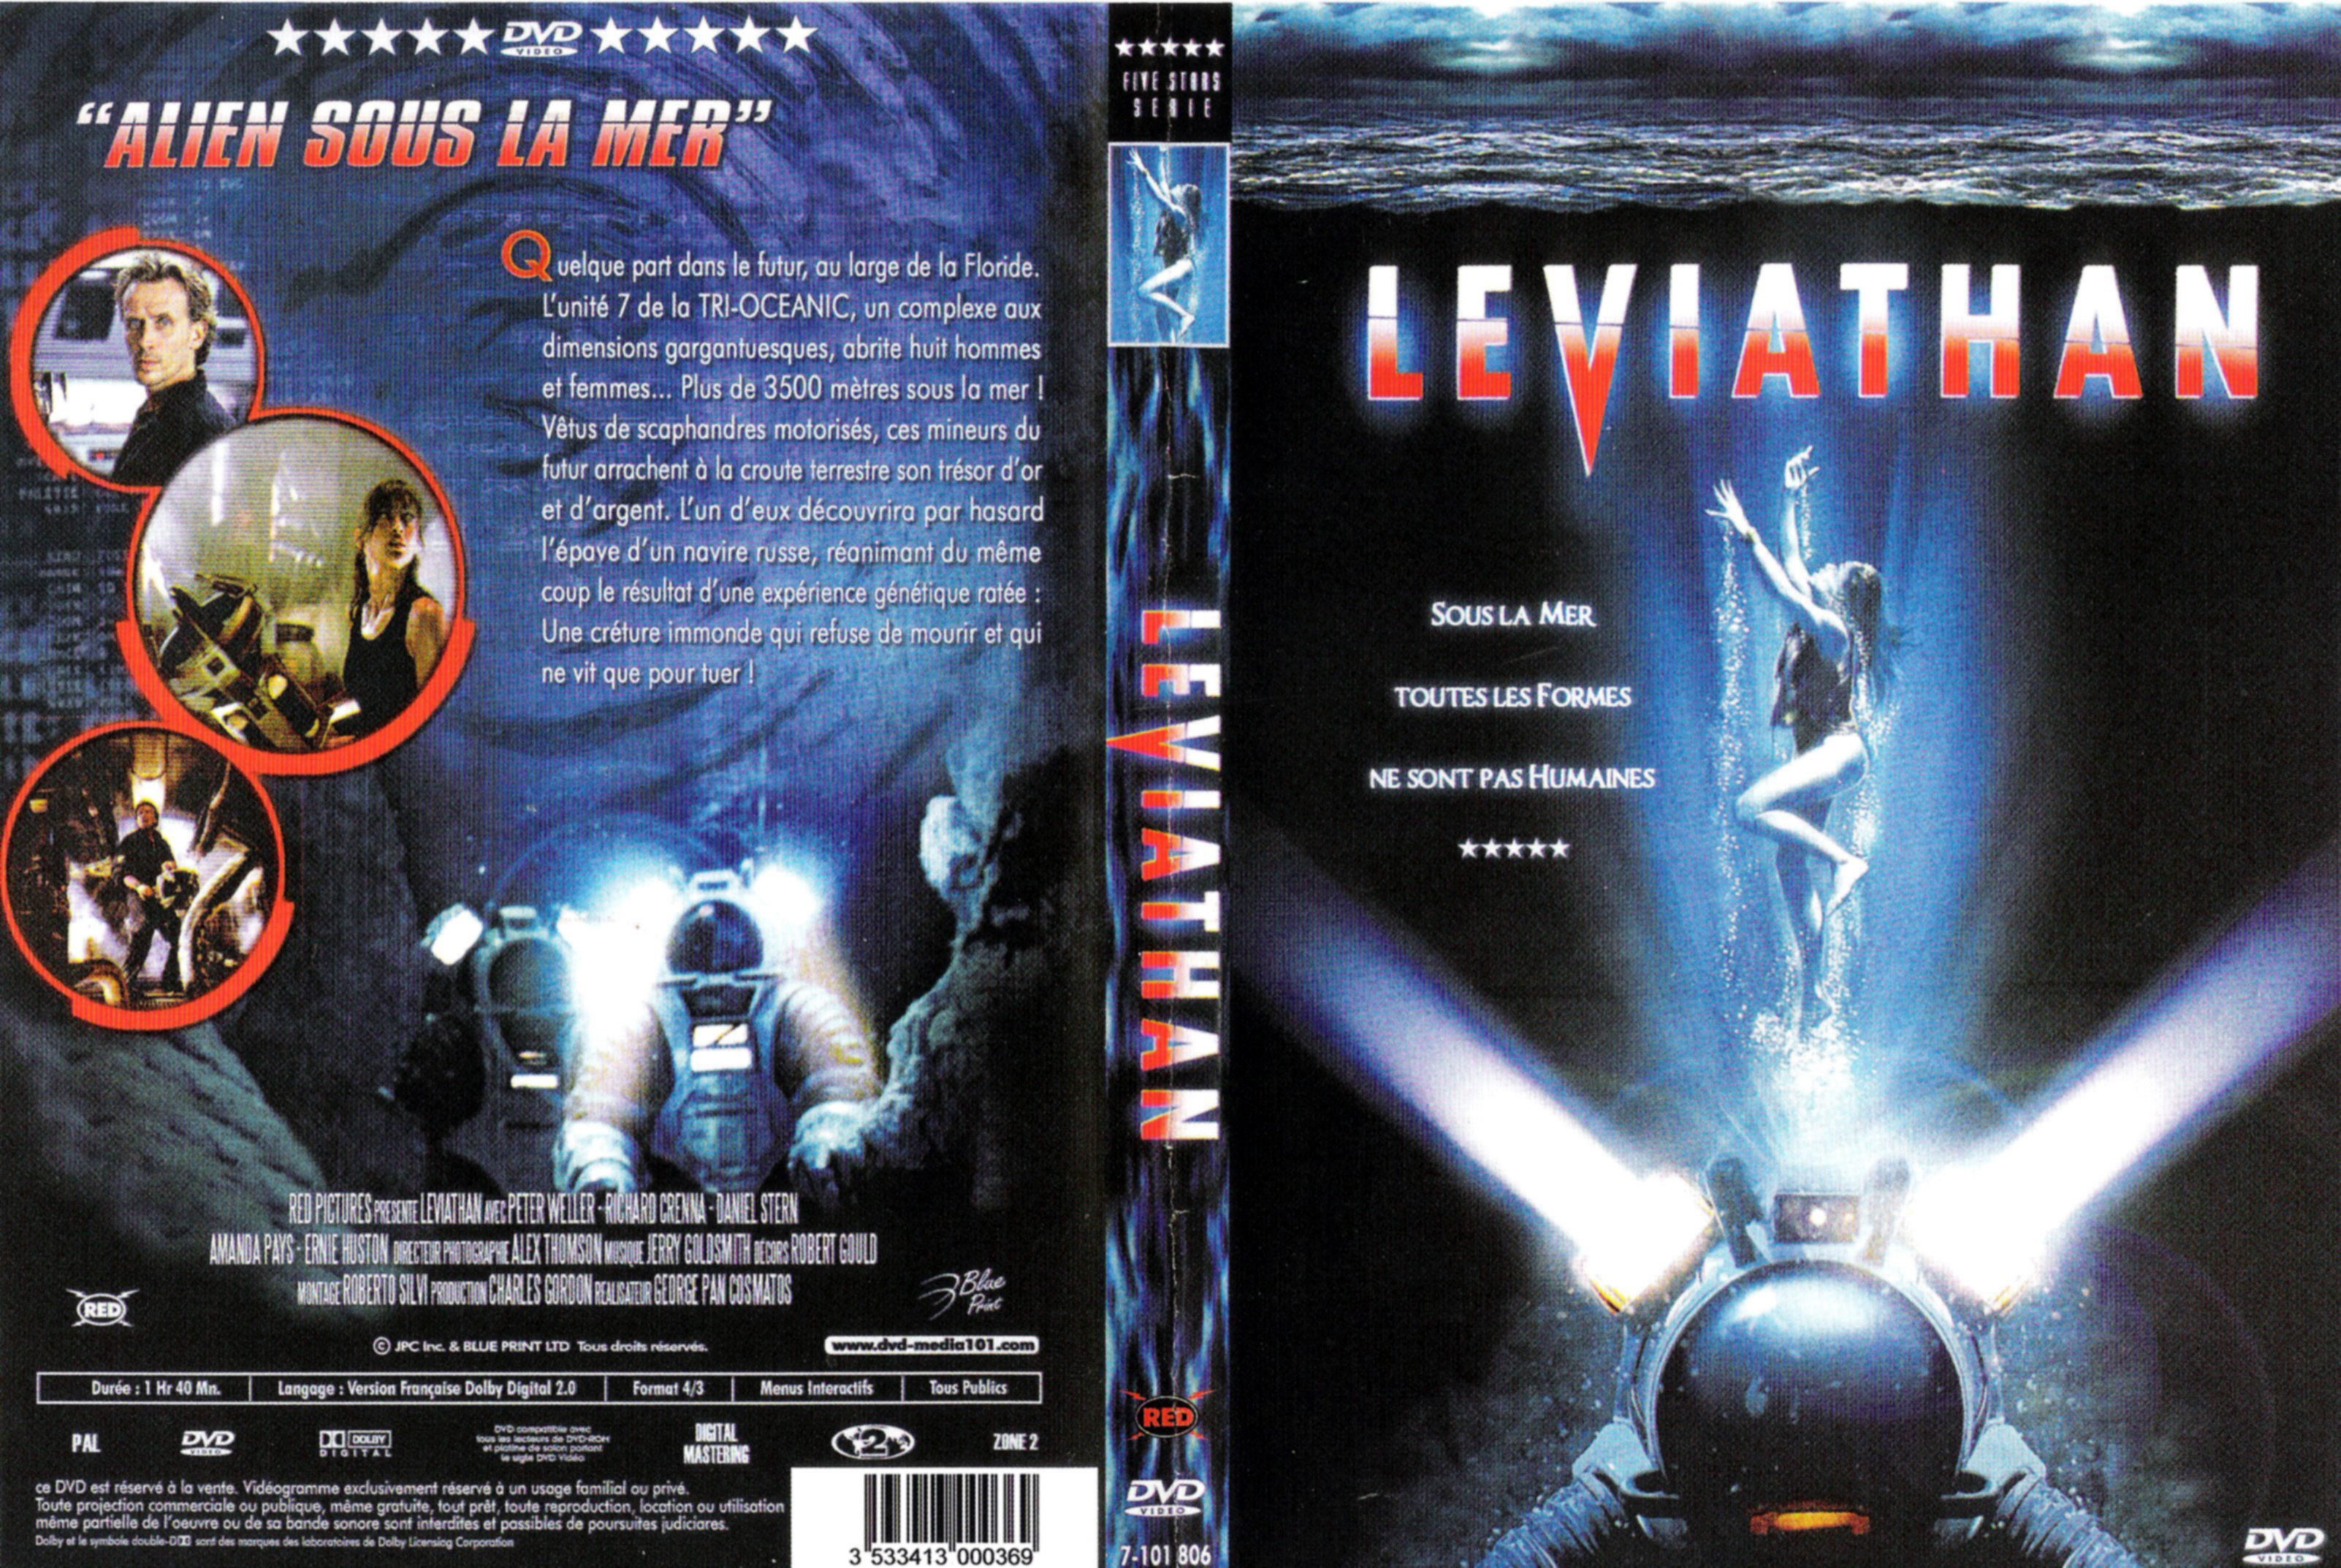 Jaquette DVD Leviathan v5